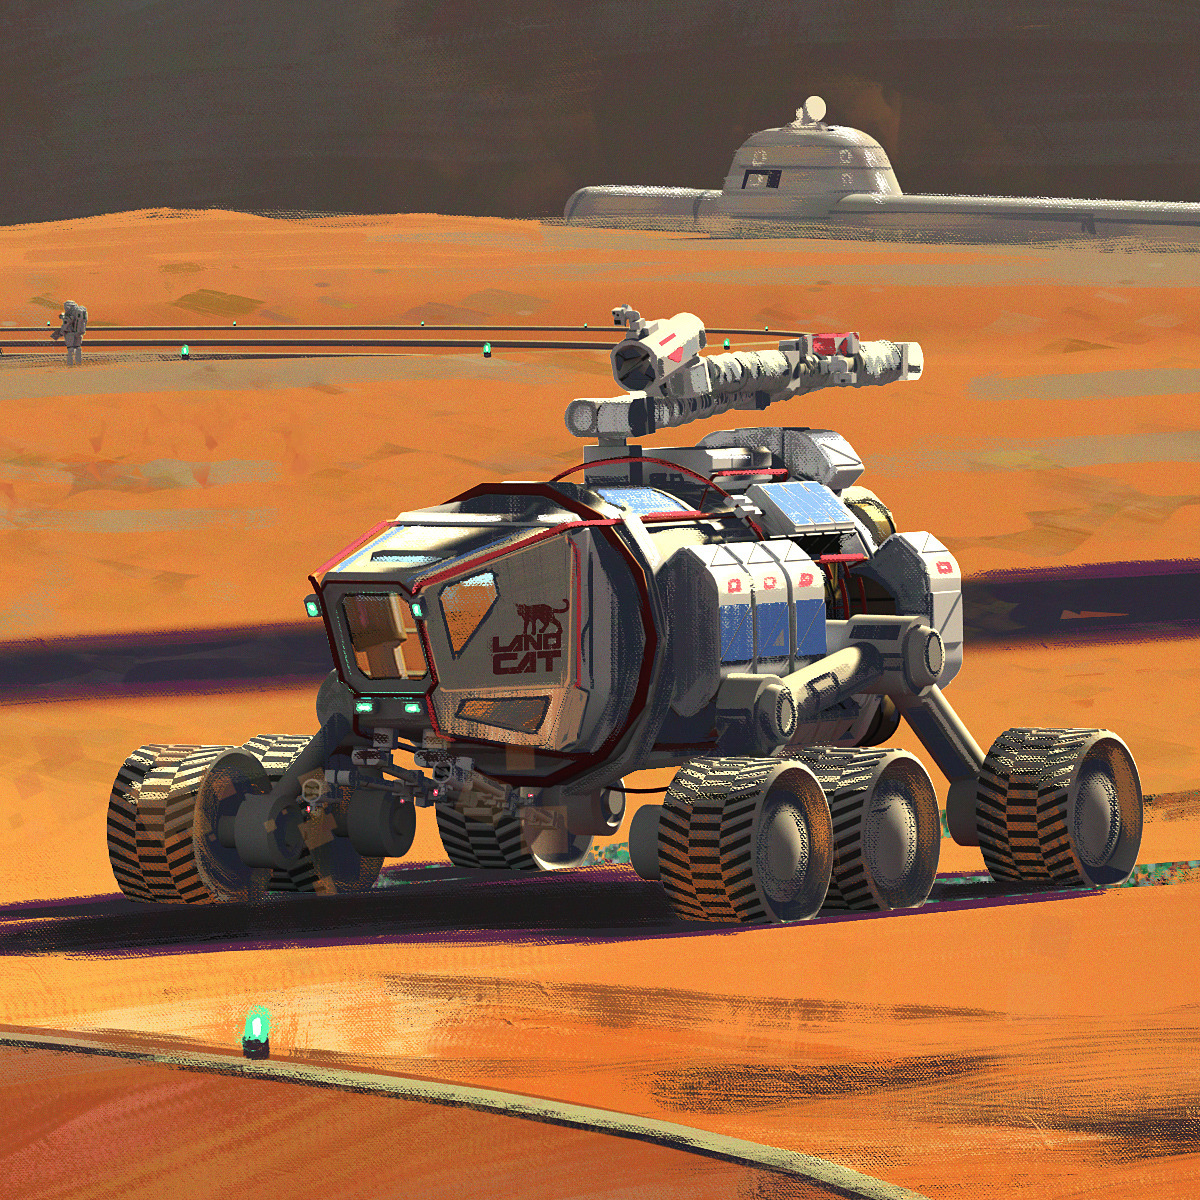 spacex-its-spaceships-at-mars-base-alpha-by-maciej-rebisz-human-mars